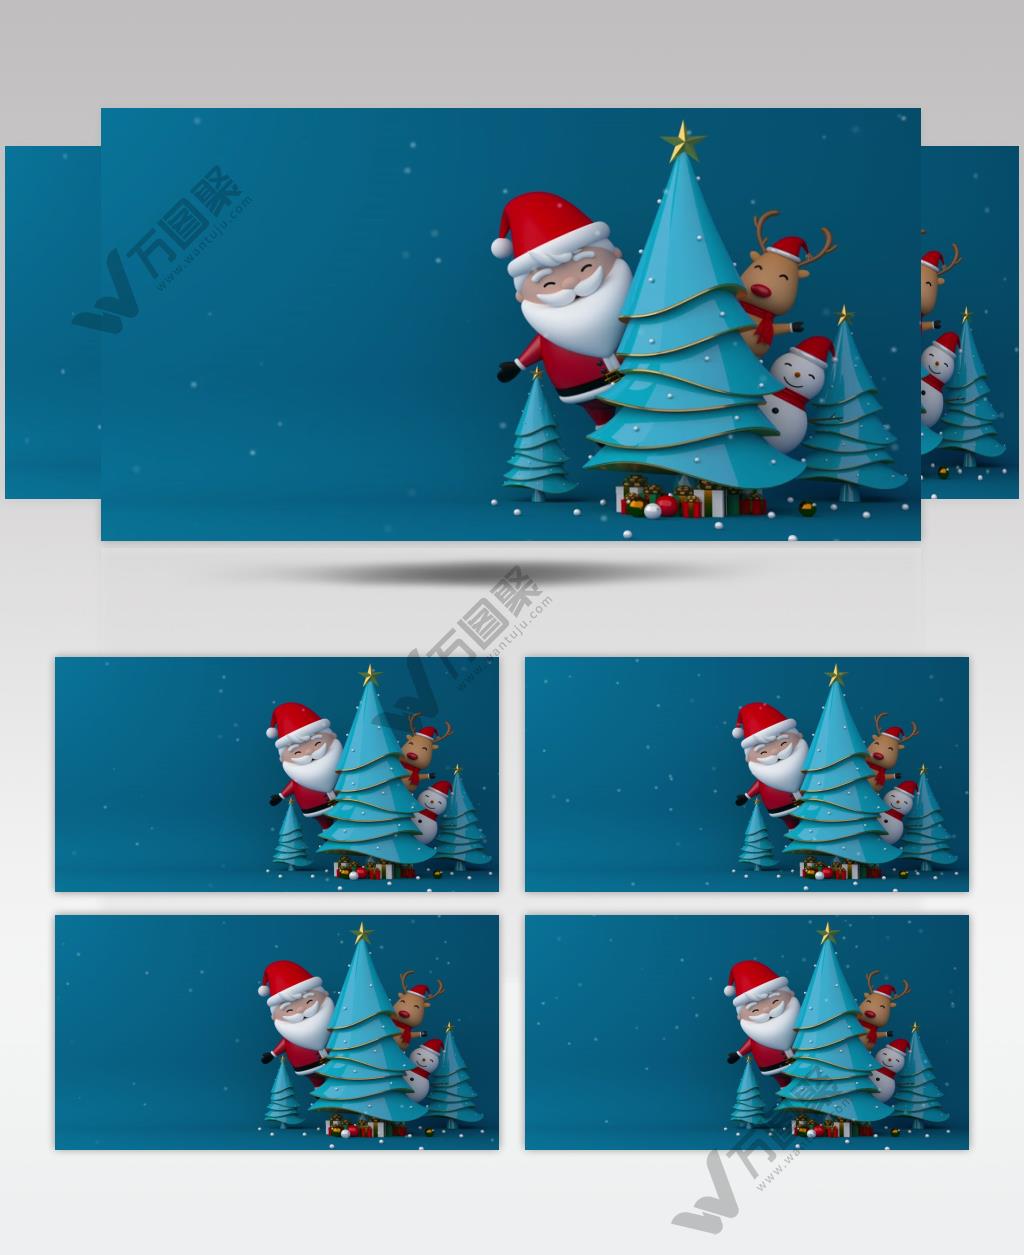 3D渲染原创圣诞节素材，放心下载！圣诞老人雪人和驯鹿在圣诞树上